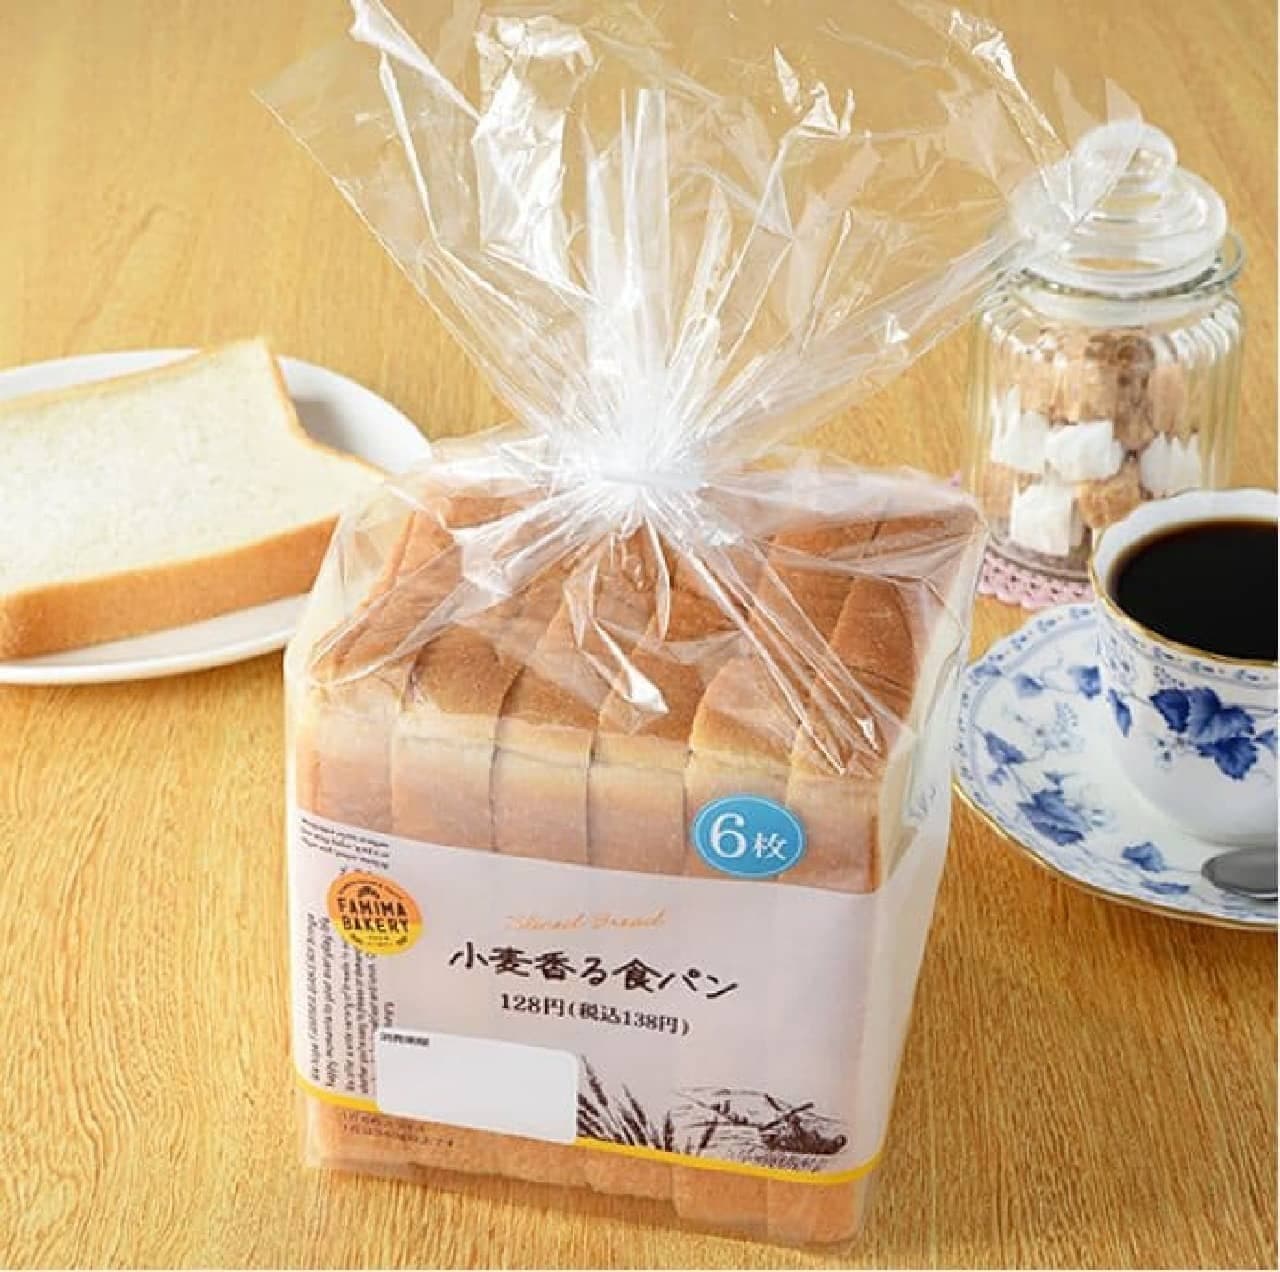 FamilyMart "6 Wheat-scented Bread